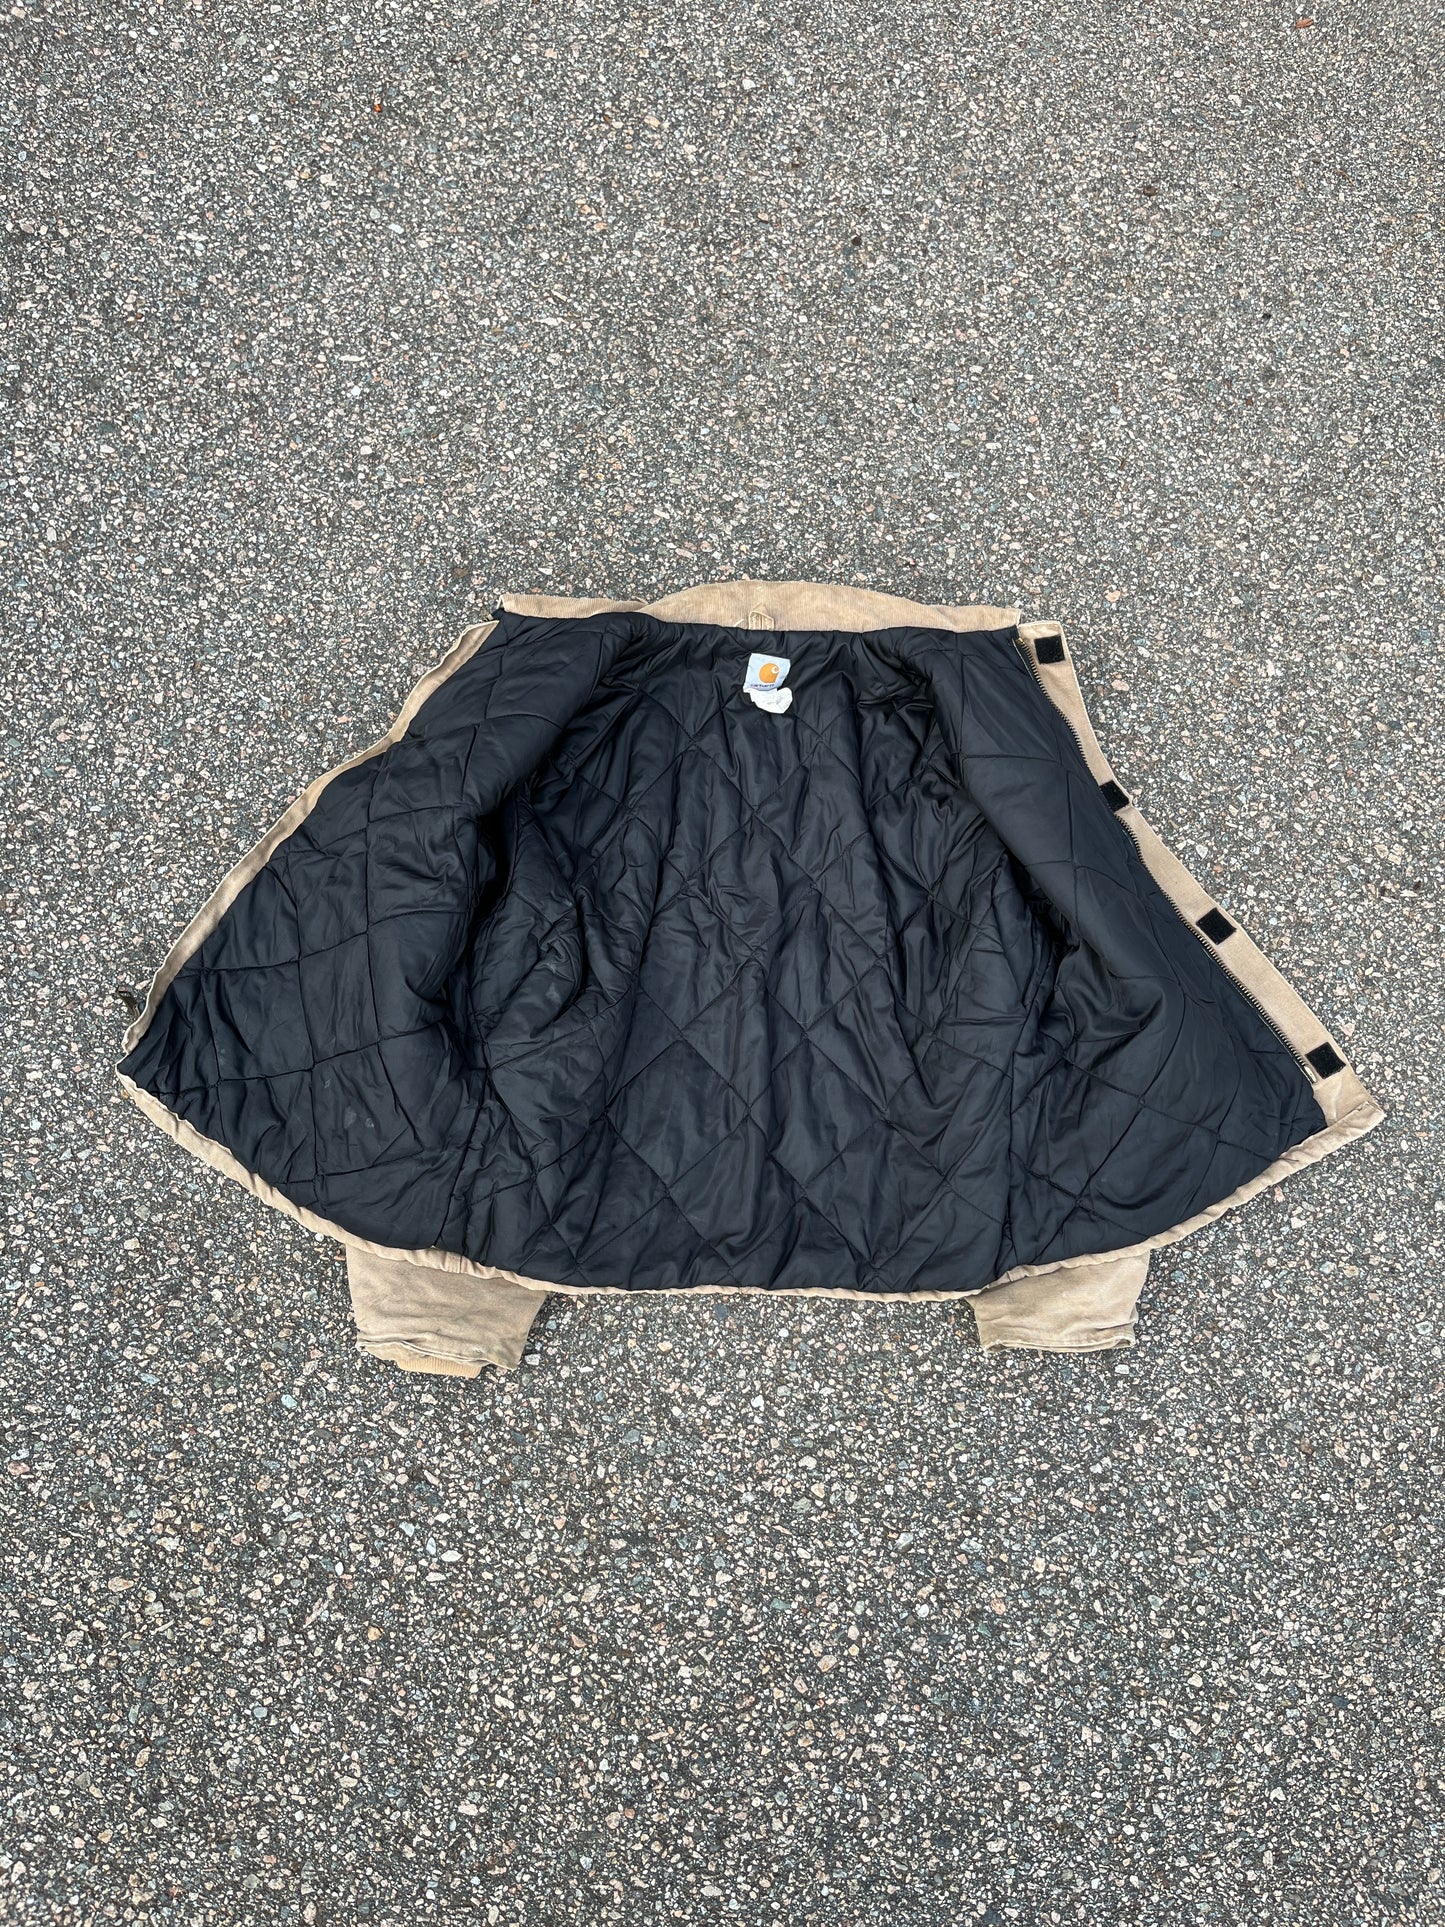 Faded Beige Carhartt Arctic Jacket - Boxy Large